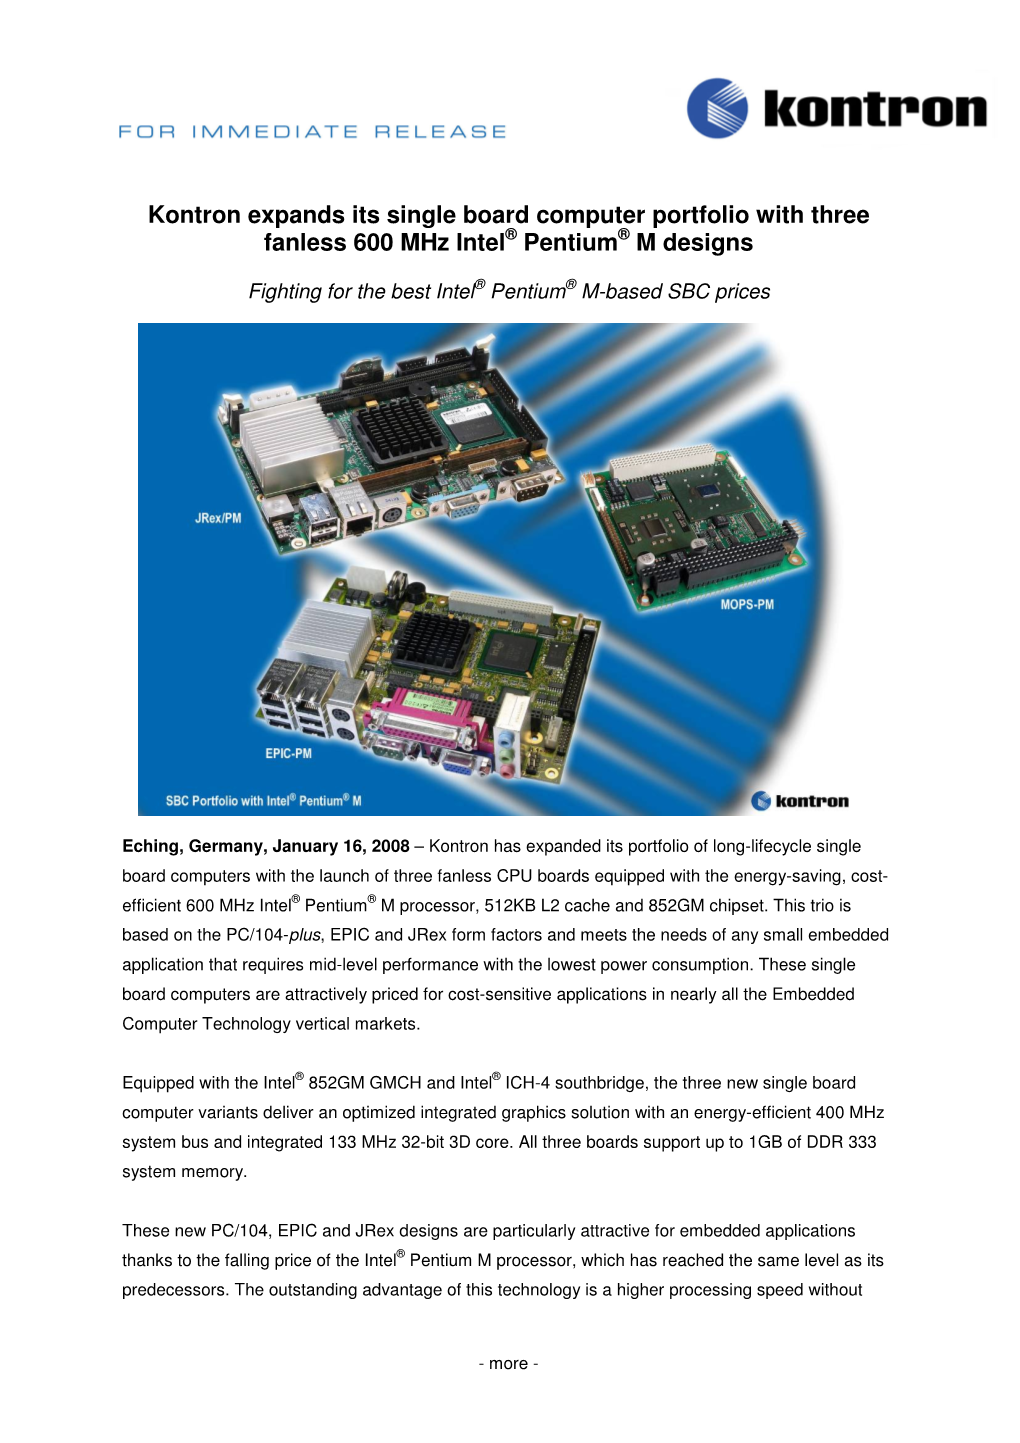 Kontron Expands Its Single Board Computer Portfolio with Three Fanless 600 Mhz Intel ® Pentium ® M Designs